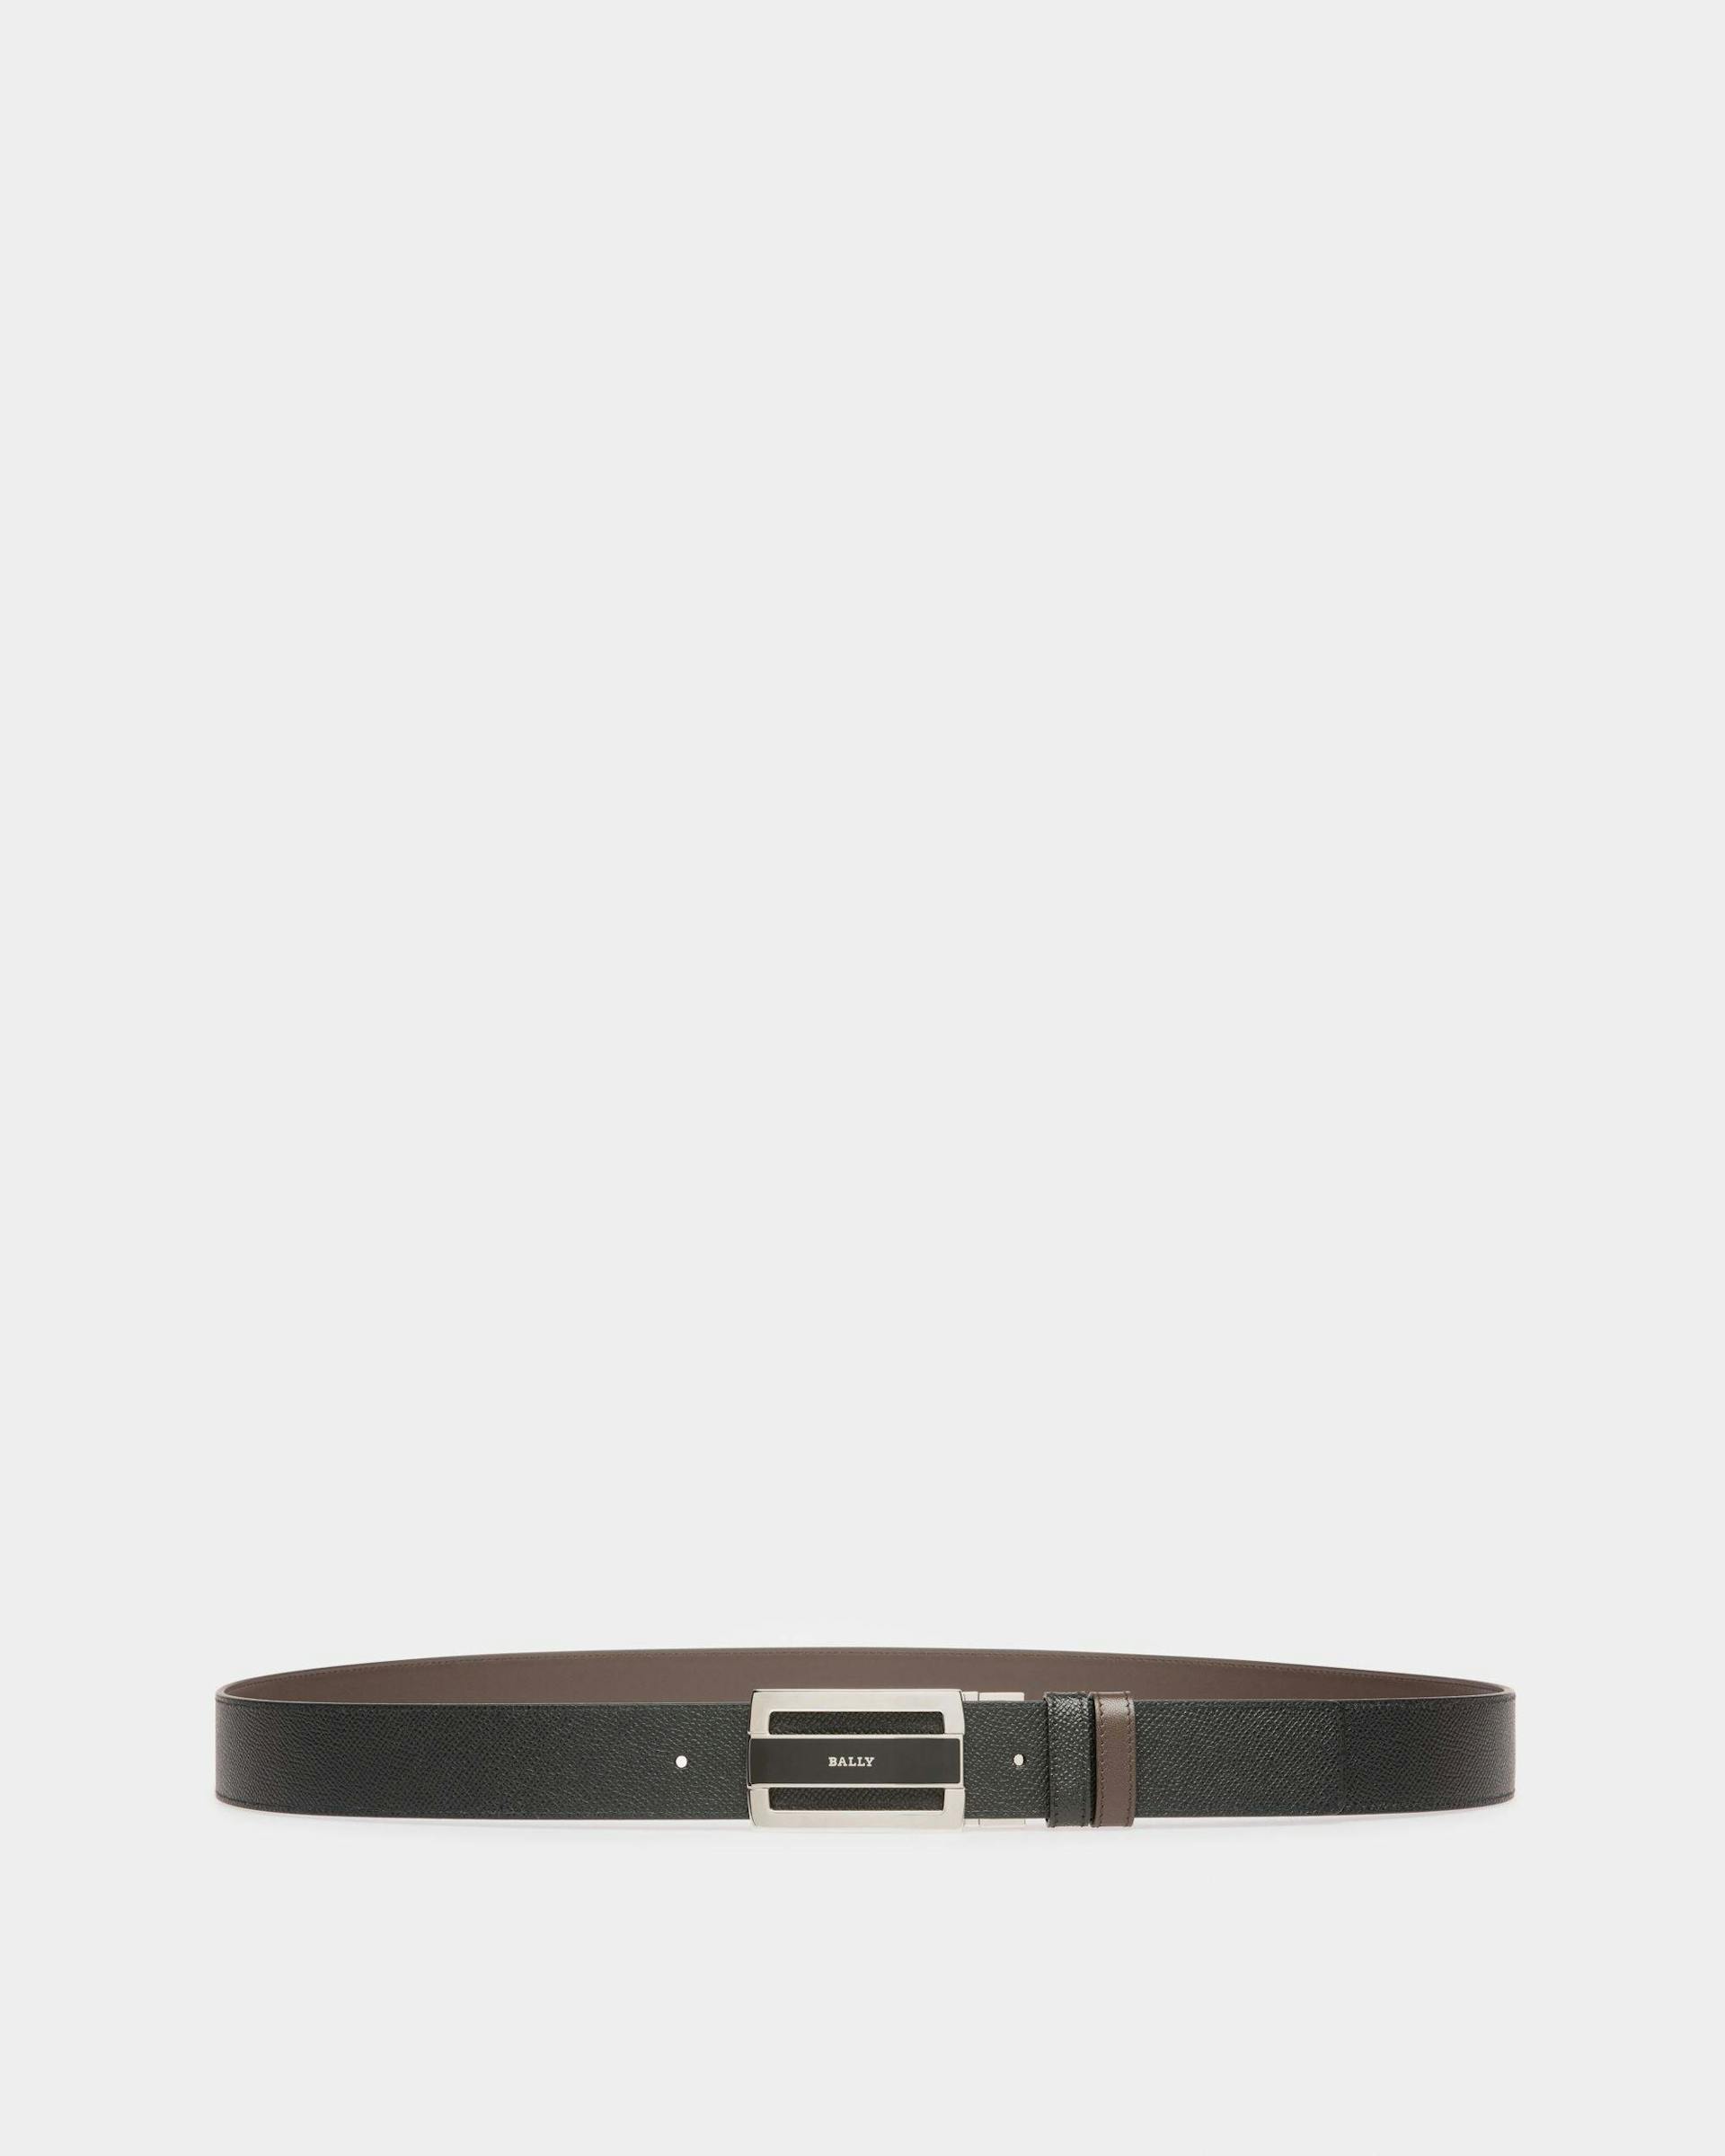 Fabazia Leather 35mm Belt In Black & Brown - Men's - Bally - 01